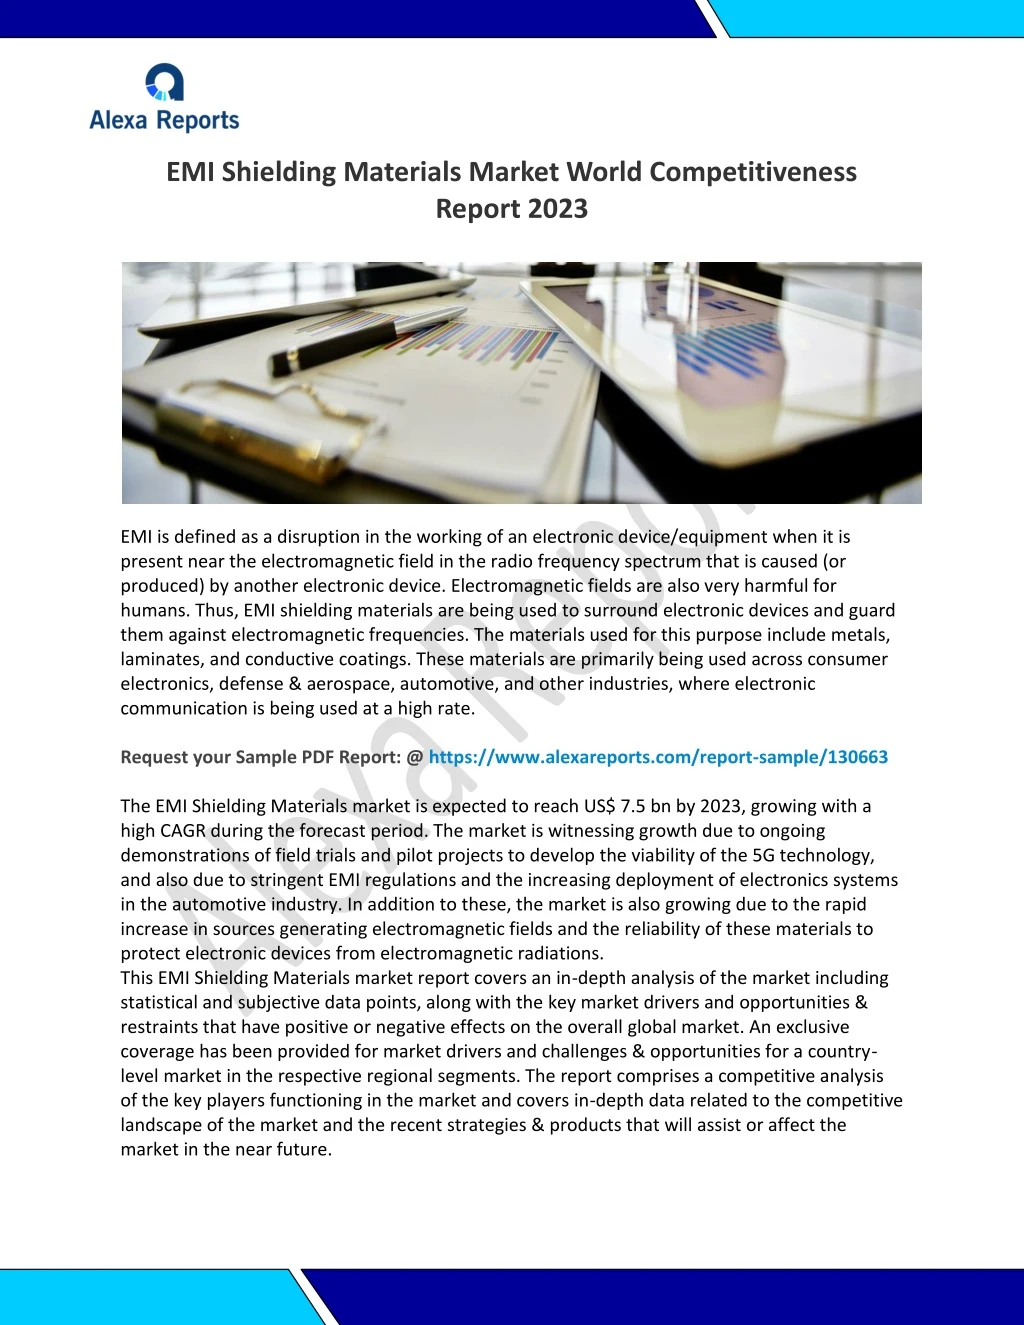 emi shielding materials market world